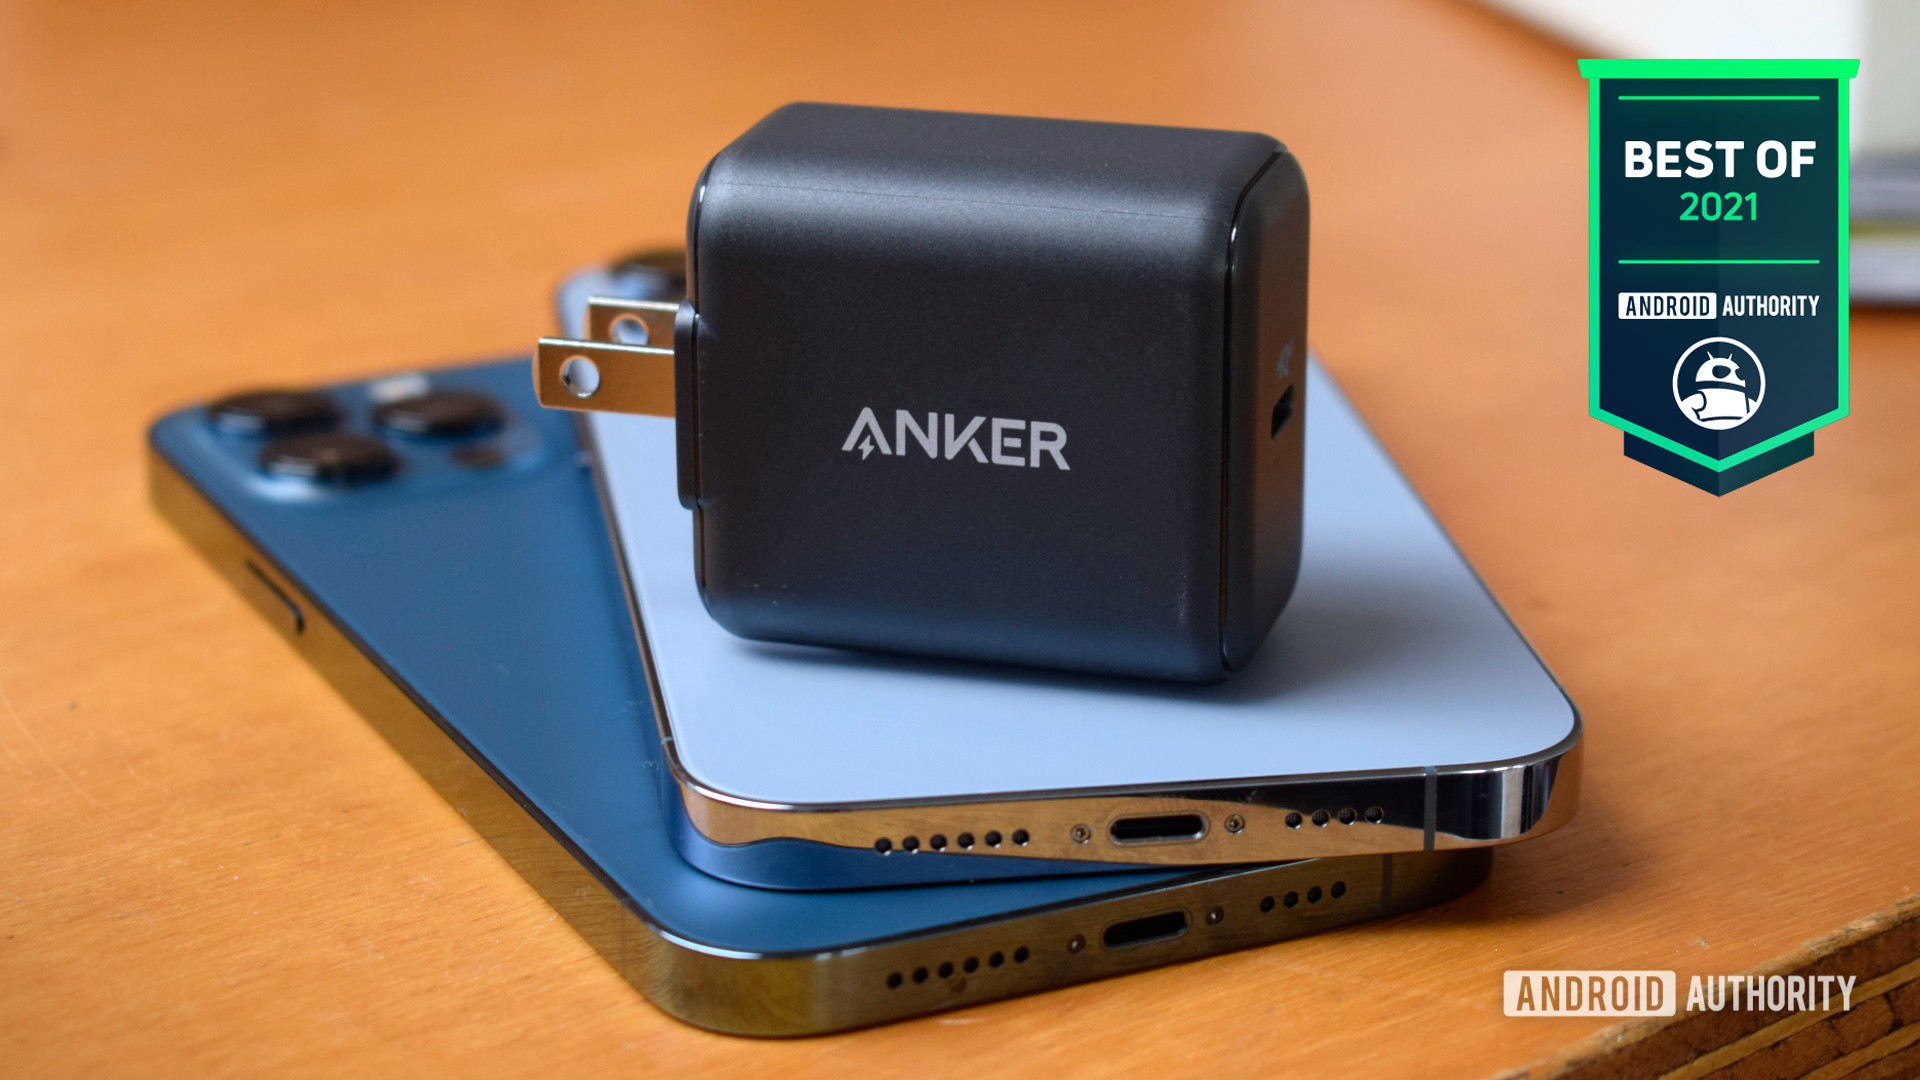 Anker PowerPort III 25W Android Authority Best of 2021 badge